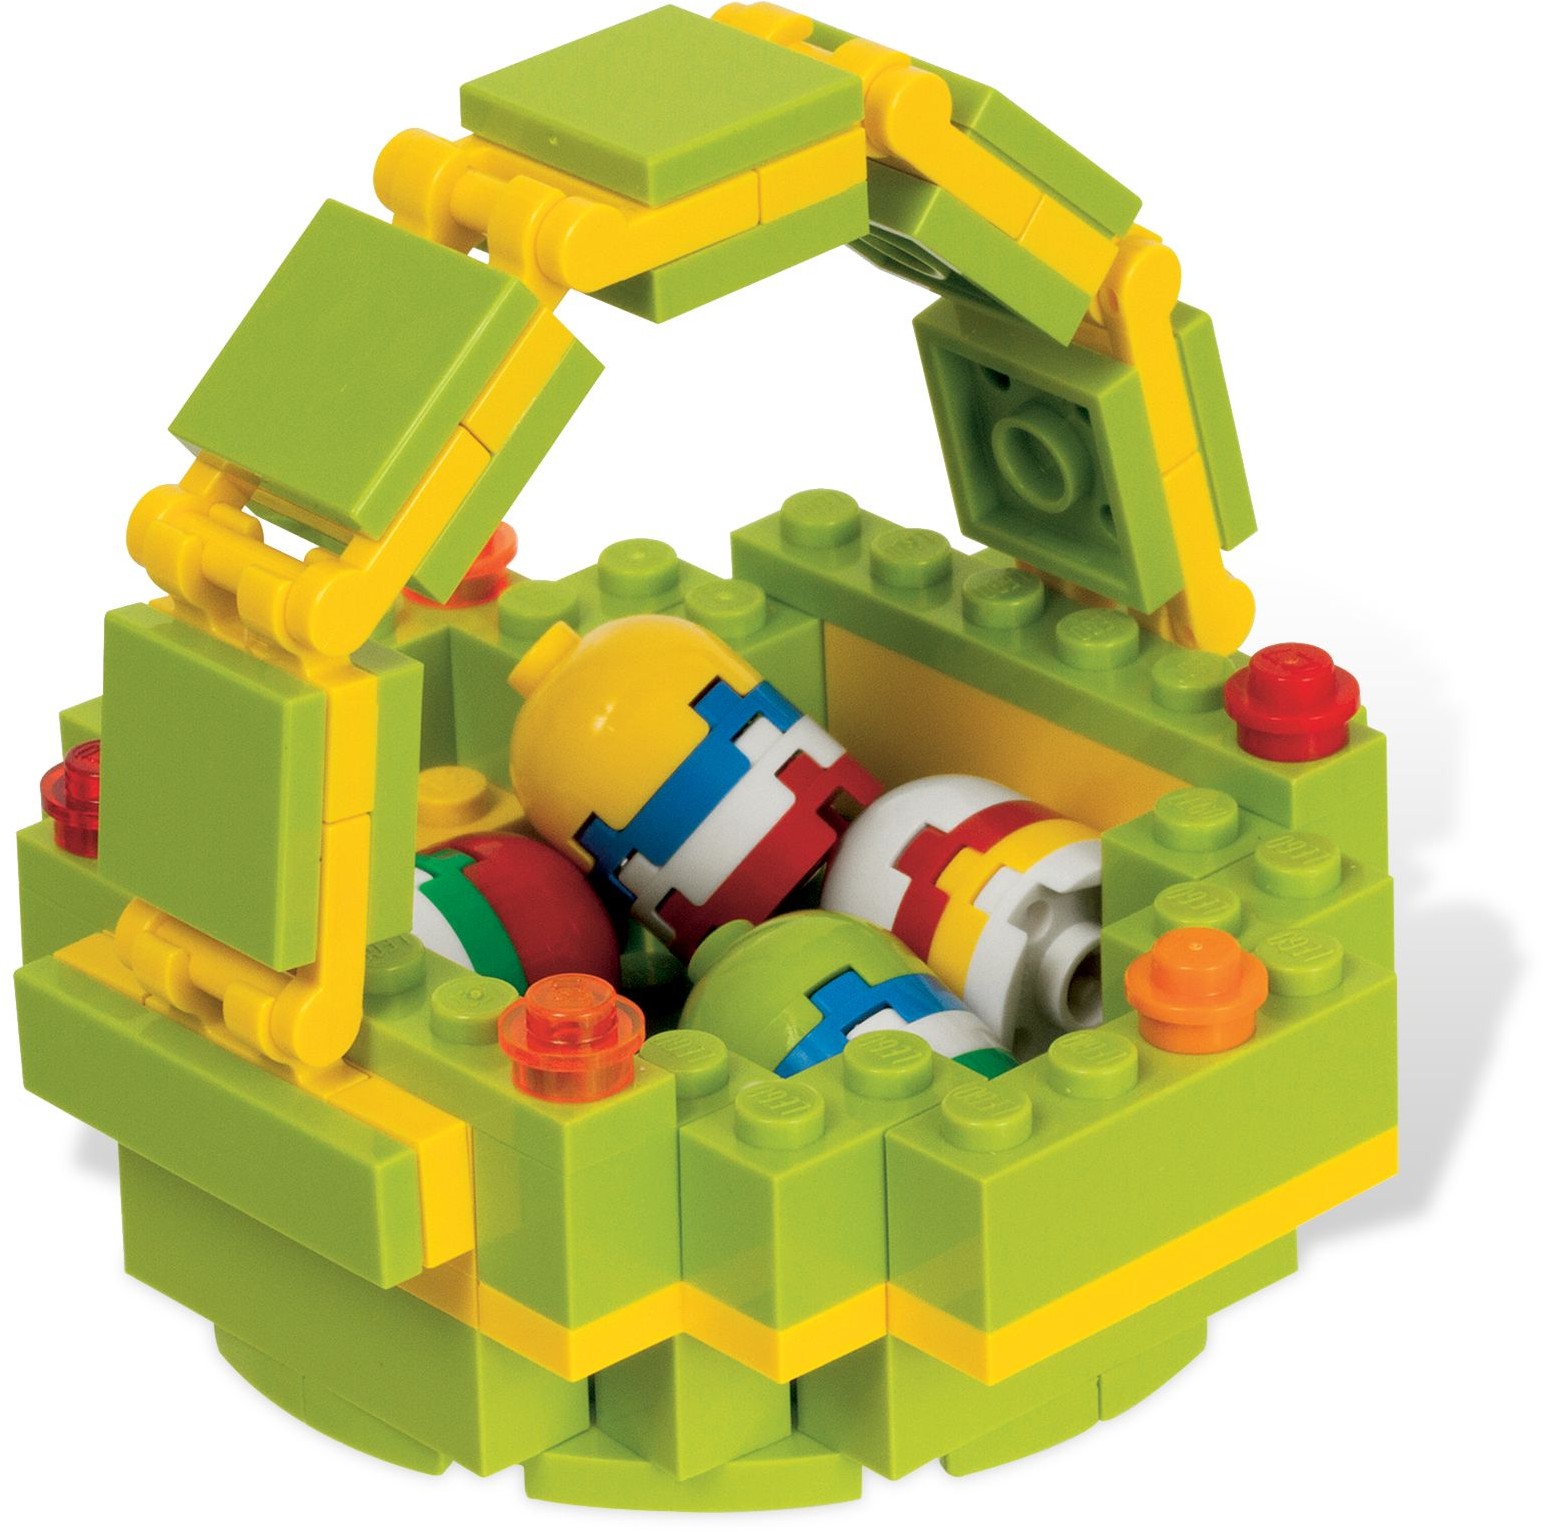 LEGO Seasonal Easter Brickset